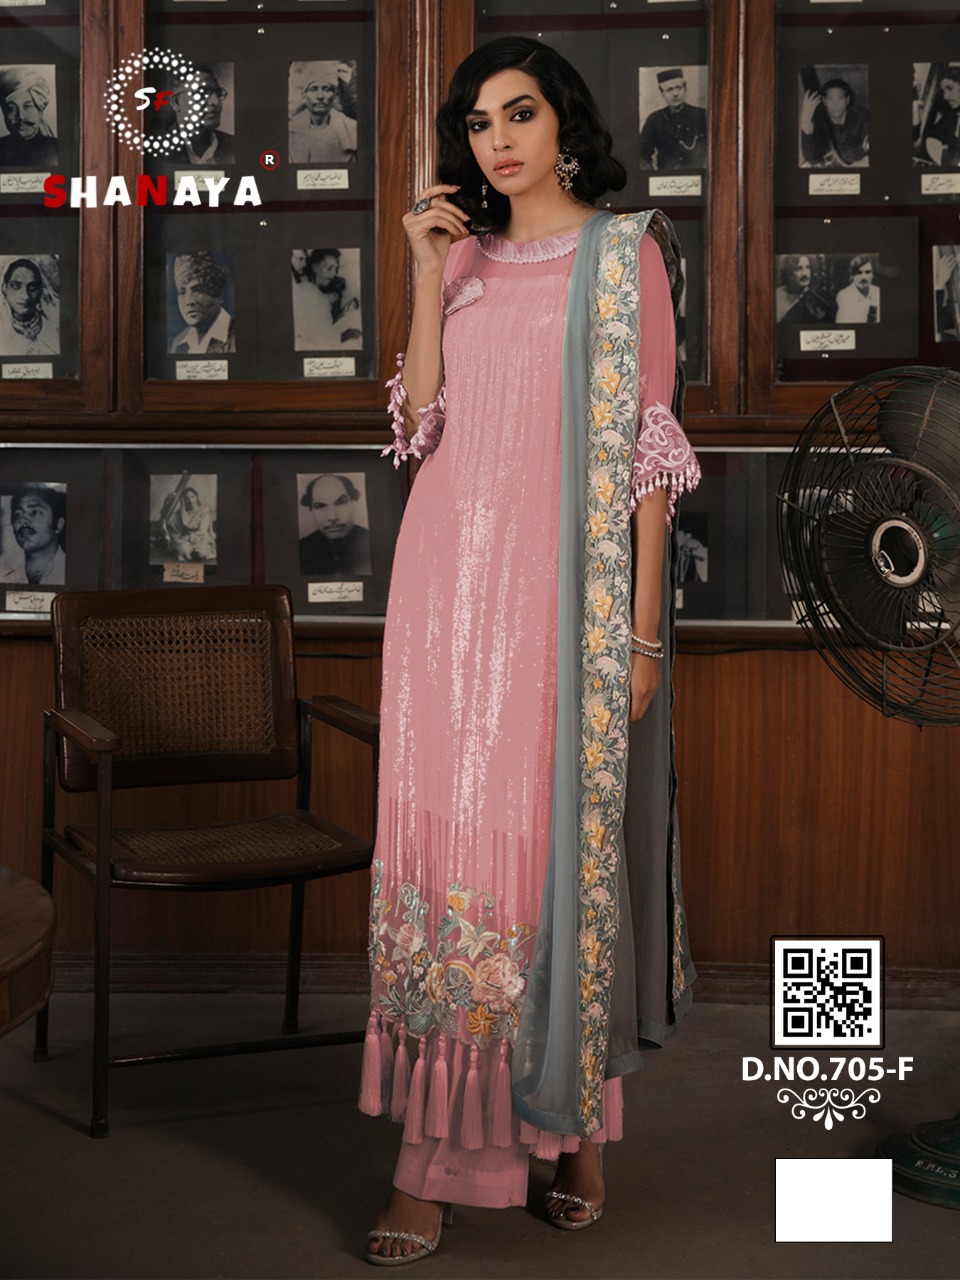 shanaya d no 705 f georgget attrective look salwar suit singal